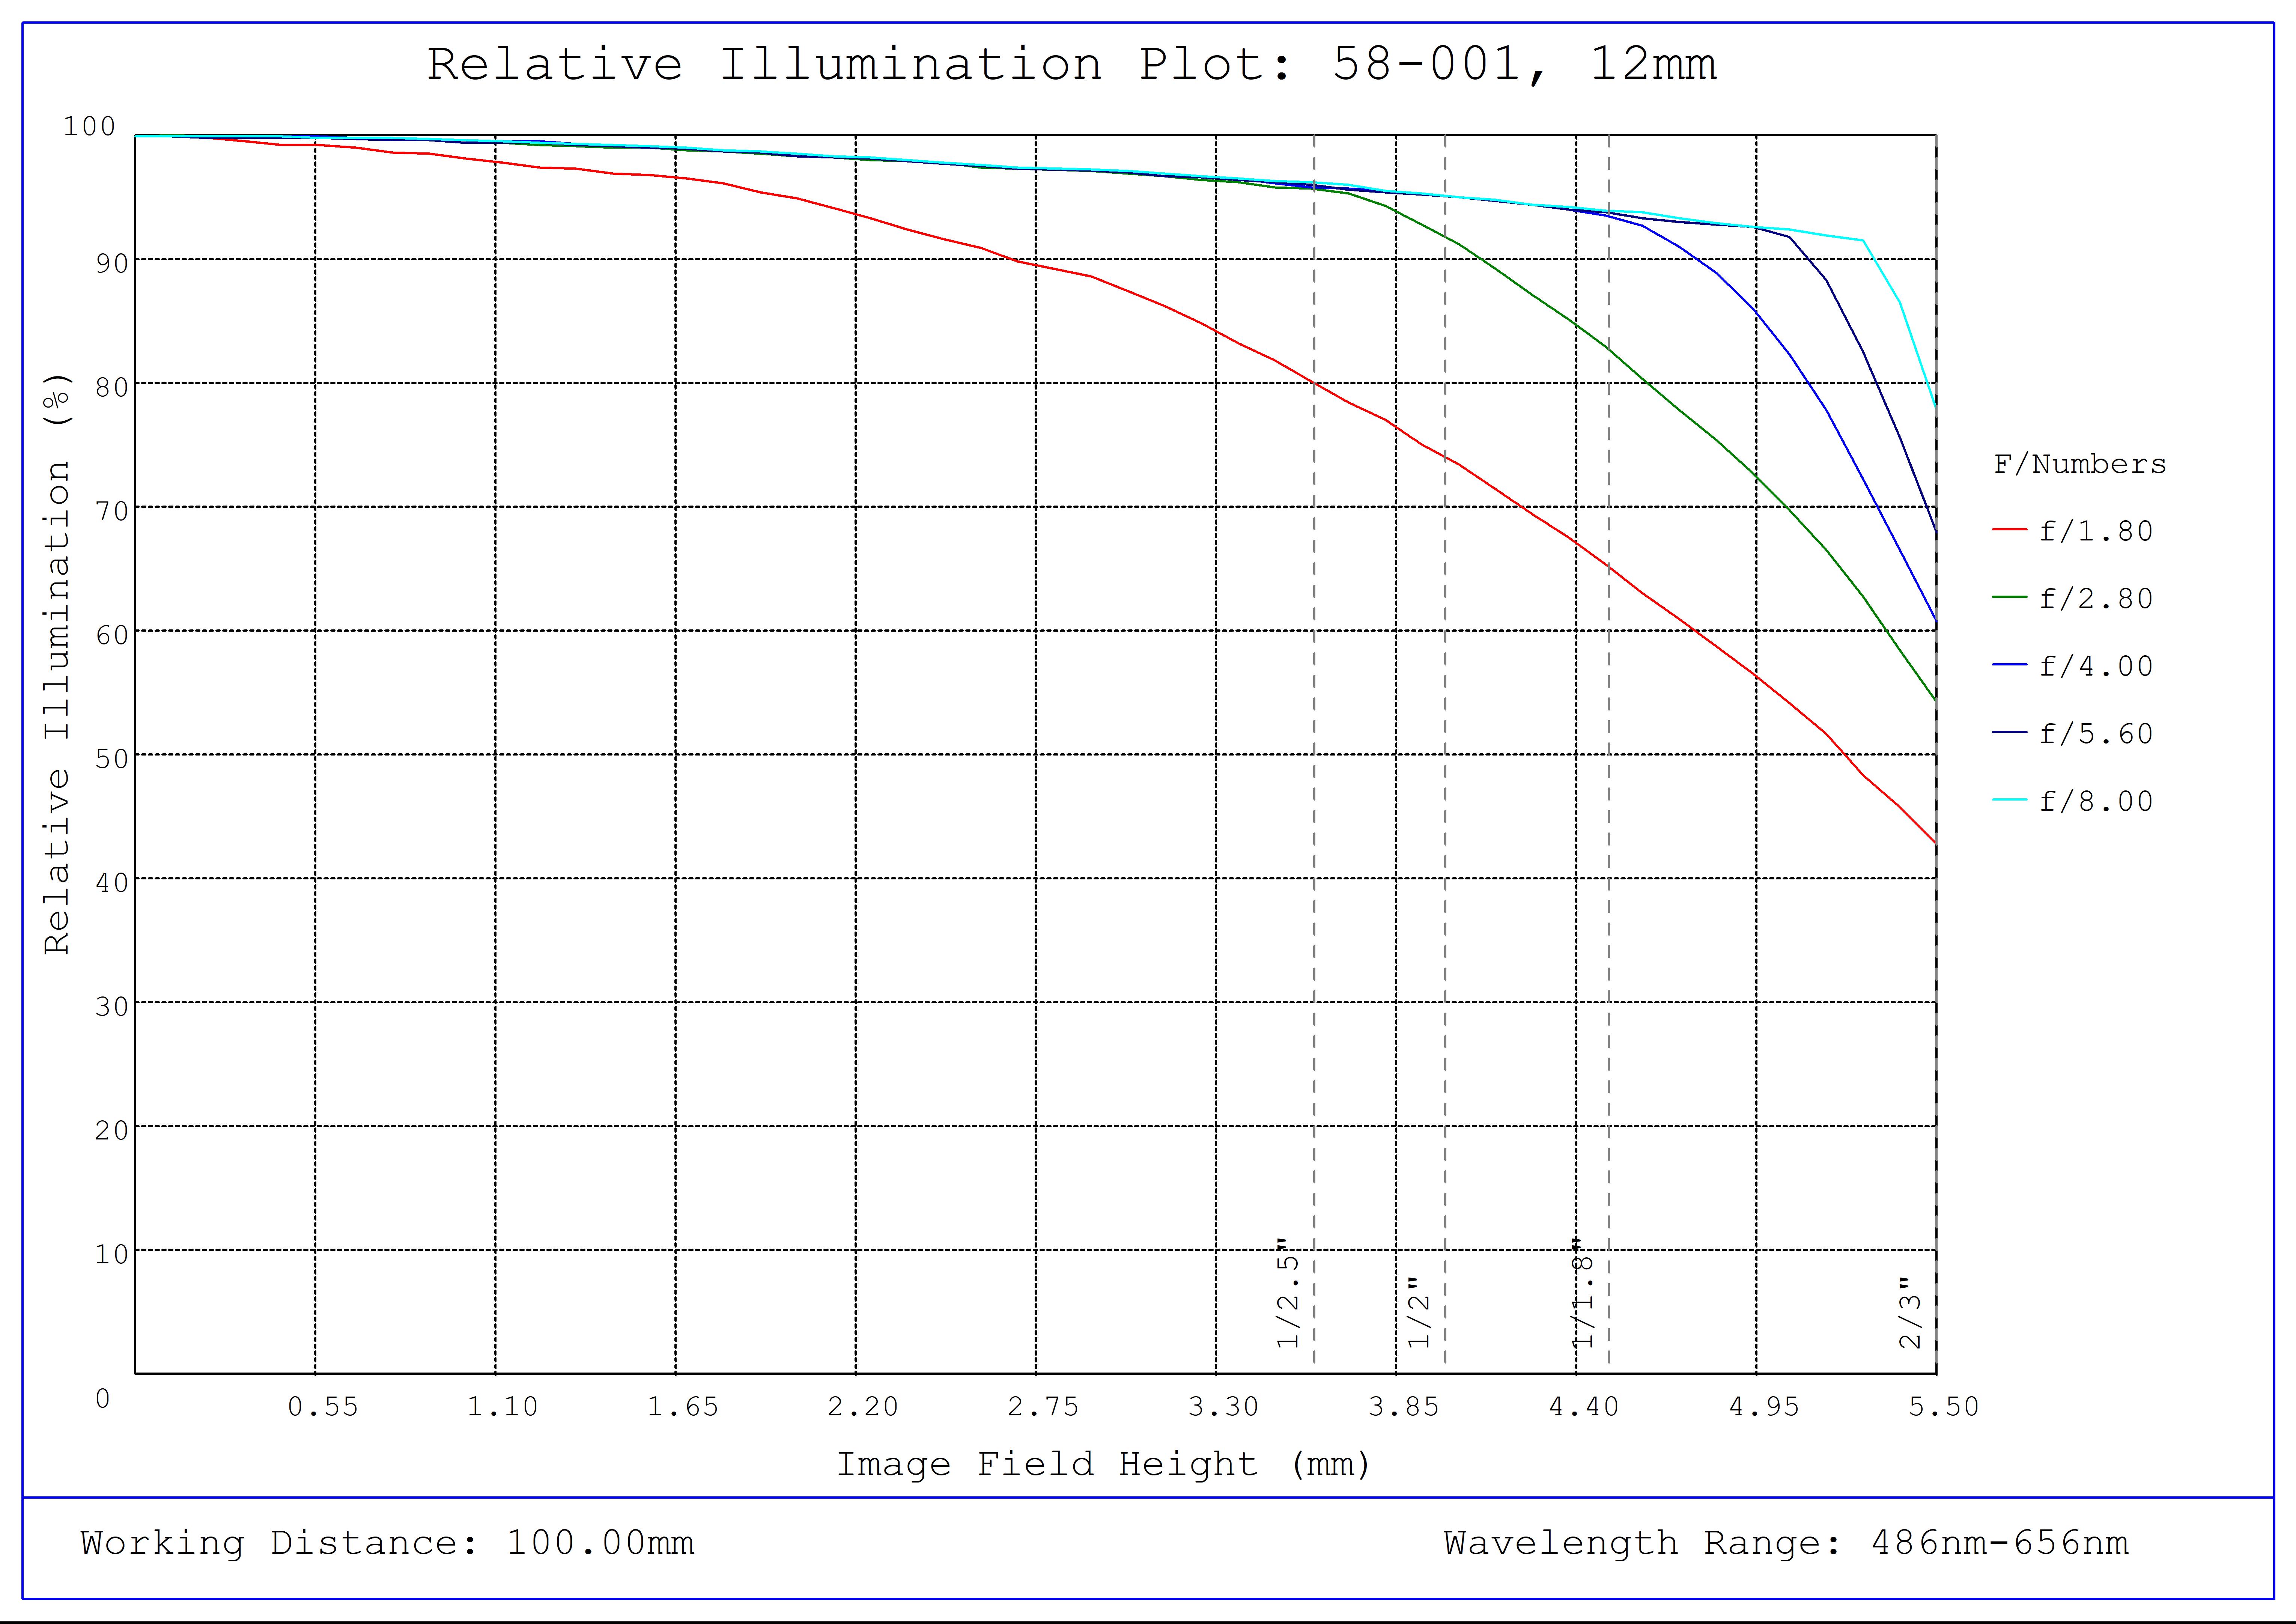 #58-001, 12mm C Series Fixed Focal Length Lens, Relative Illumination Plot